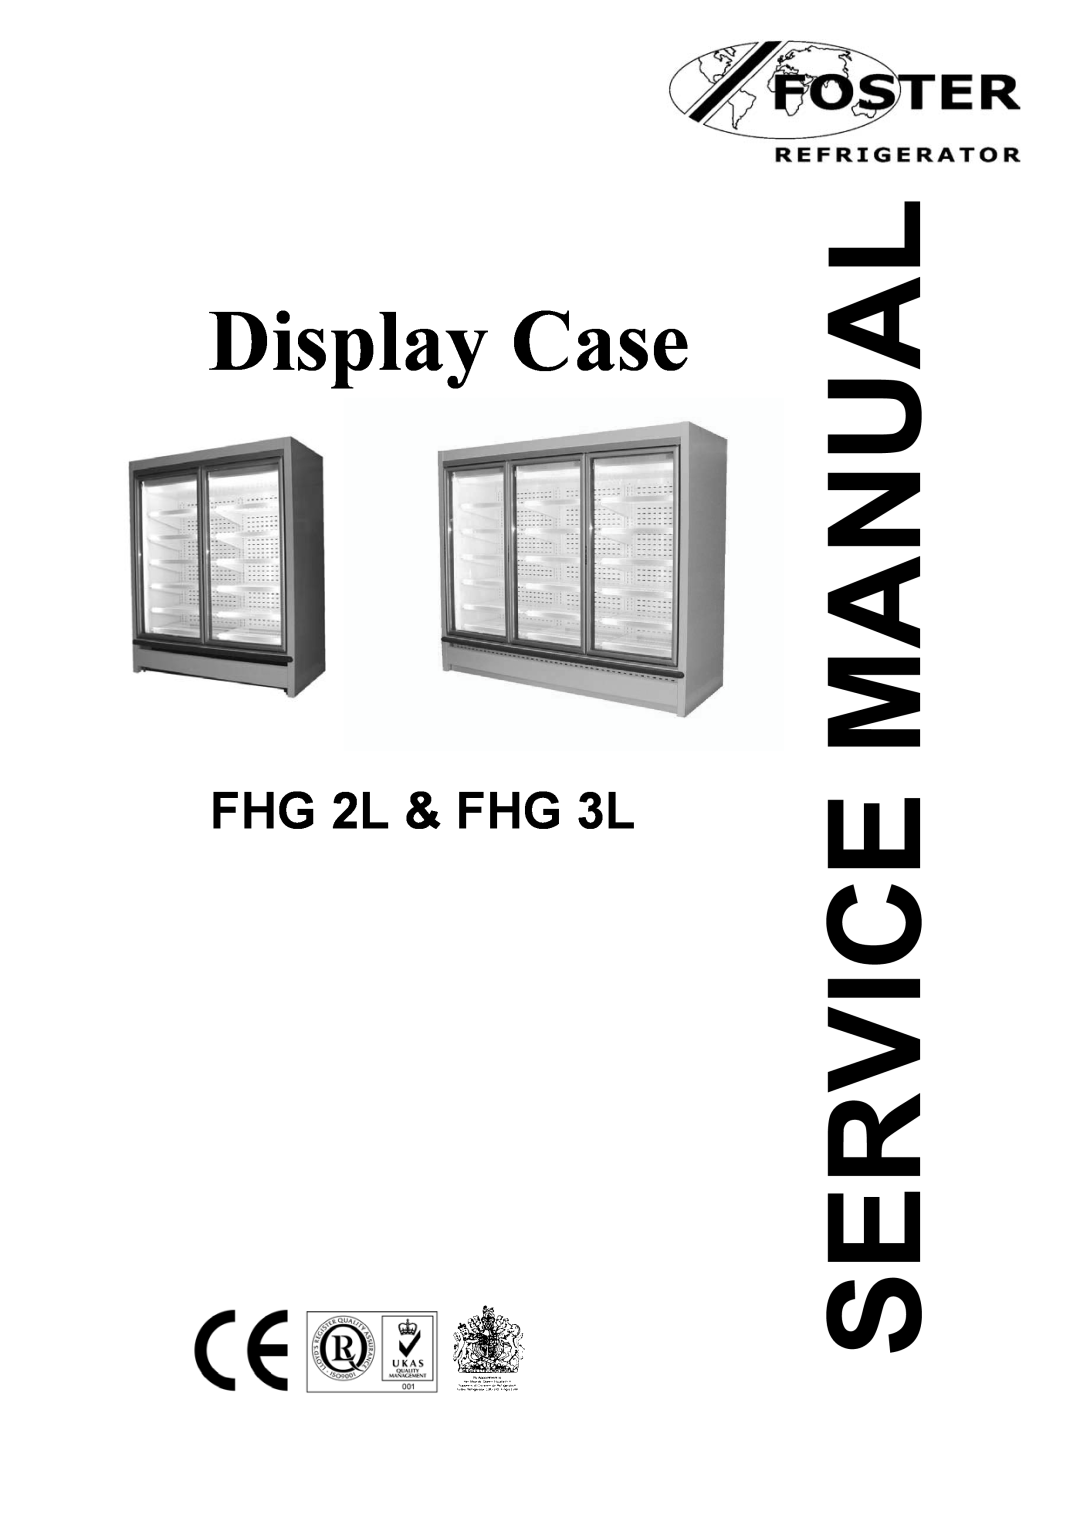 Foster manual Display Case, FHG 2L & FHG 3L 